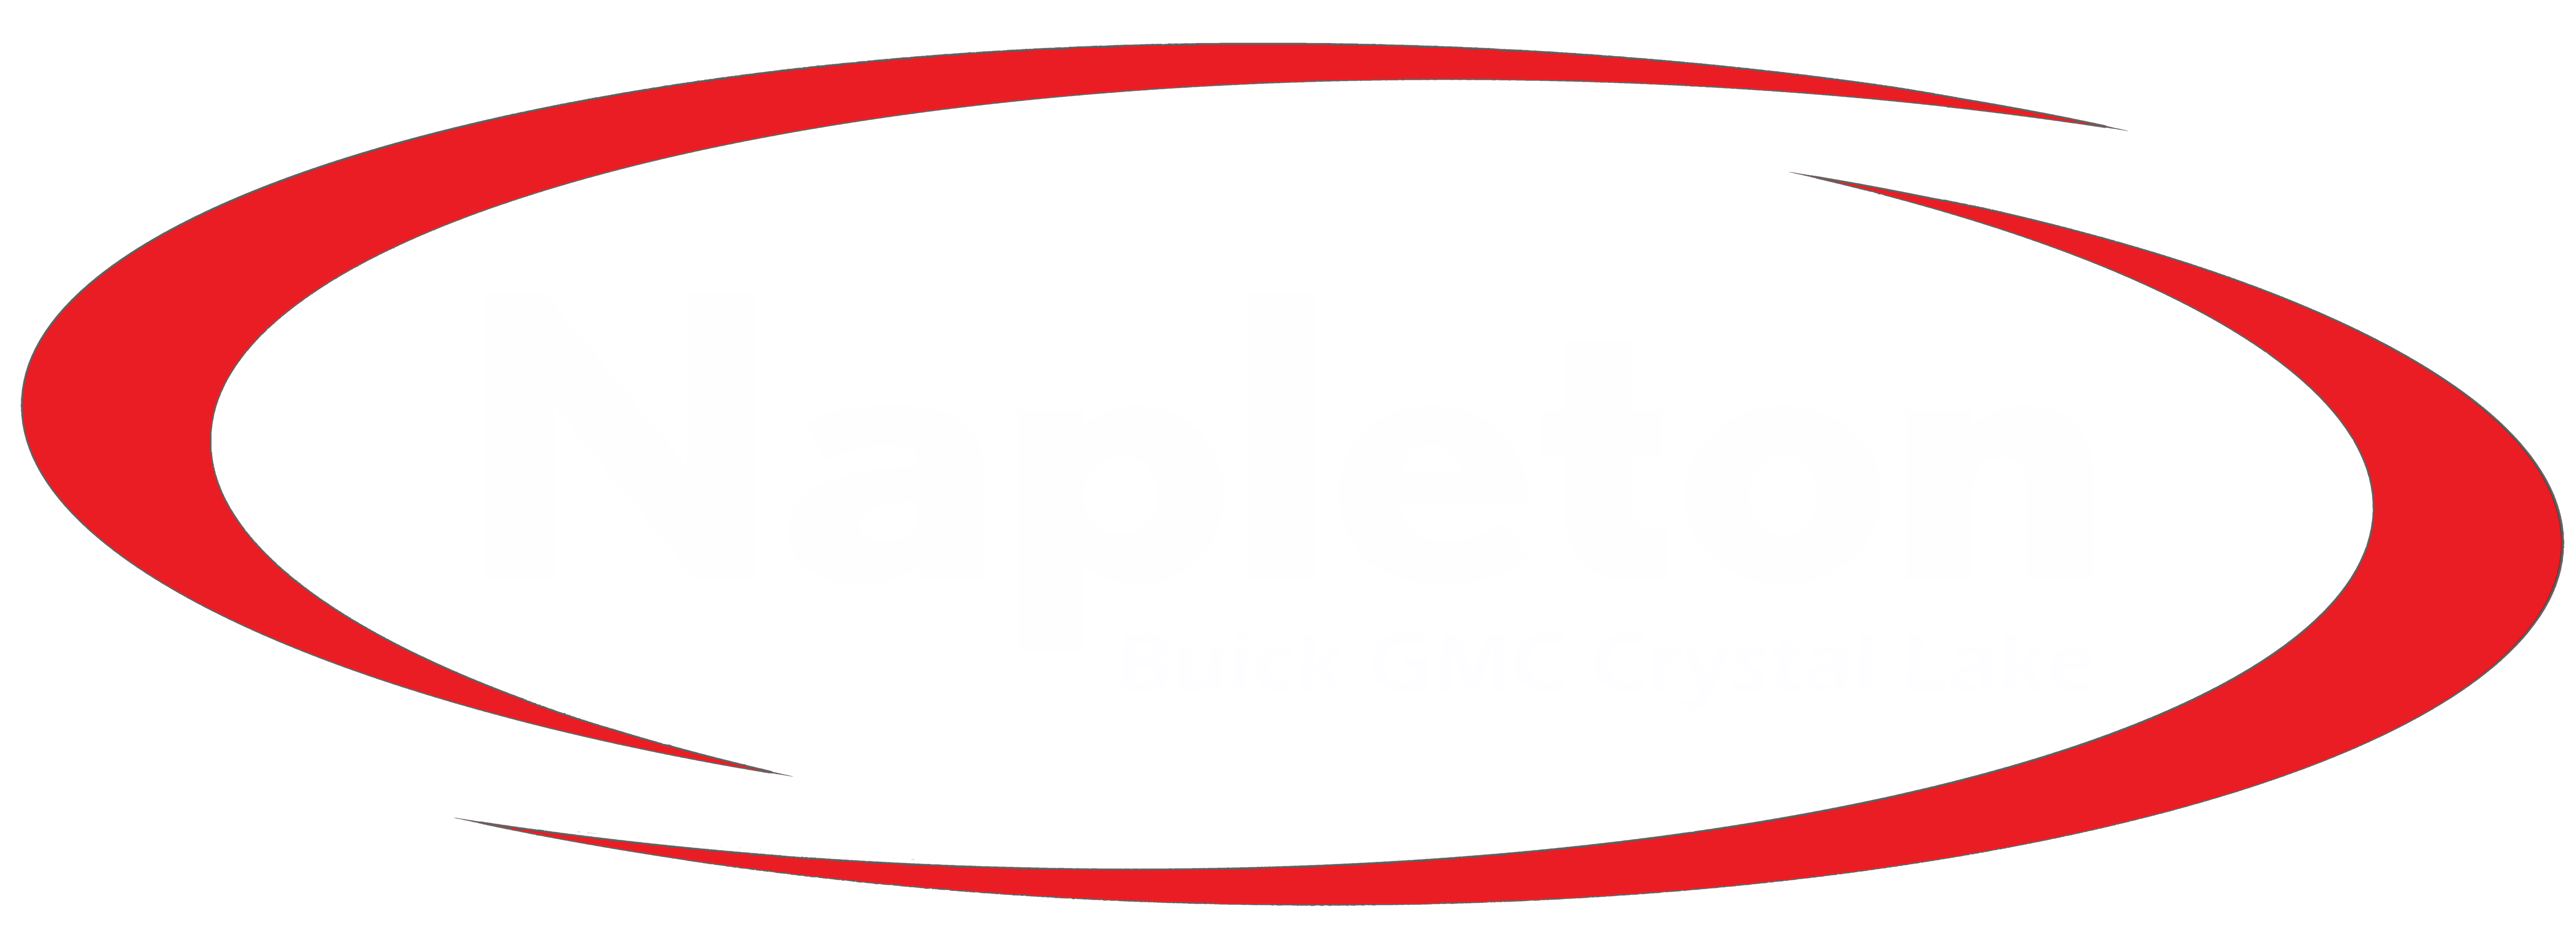 Napleton Buick GMC Crystal Lake